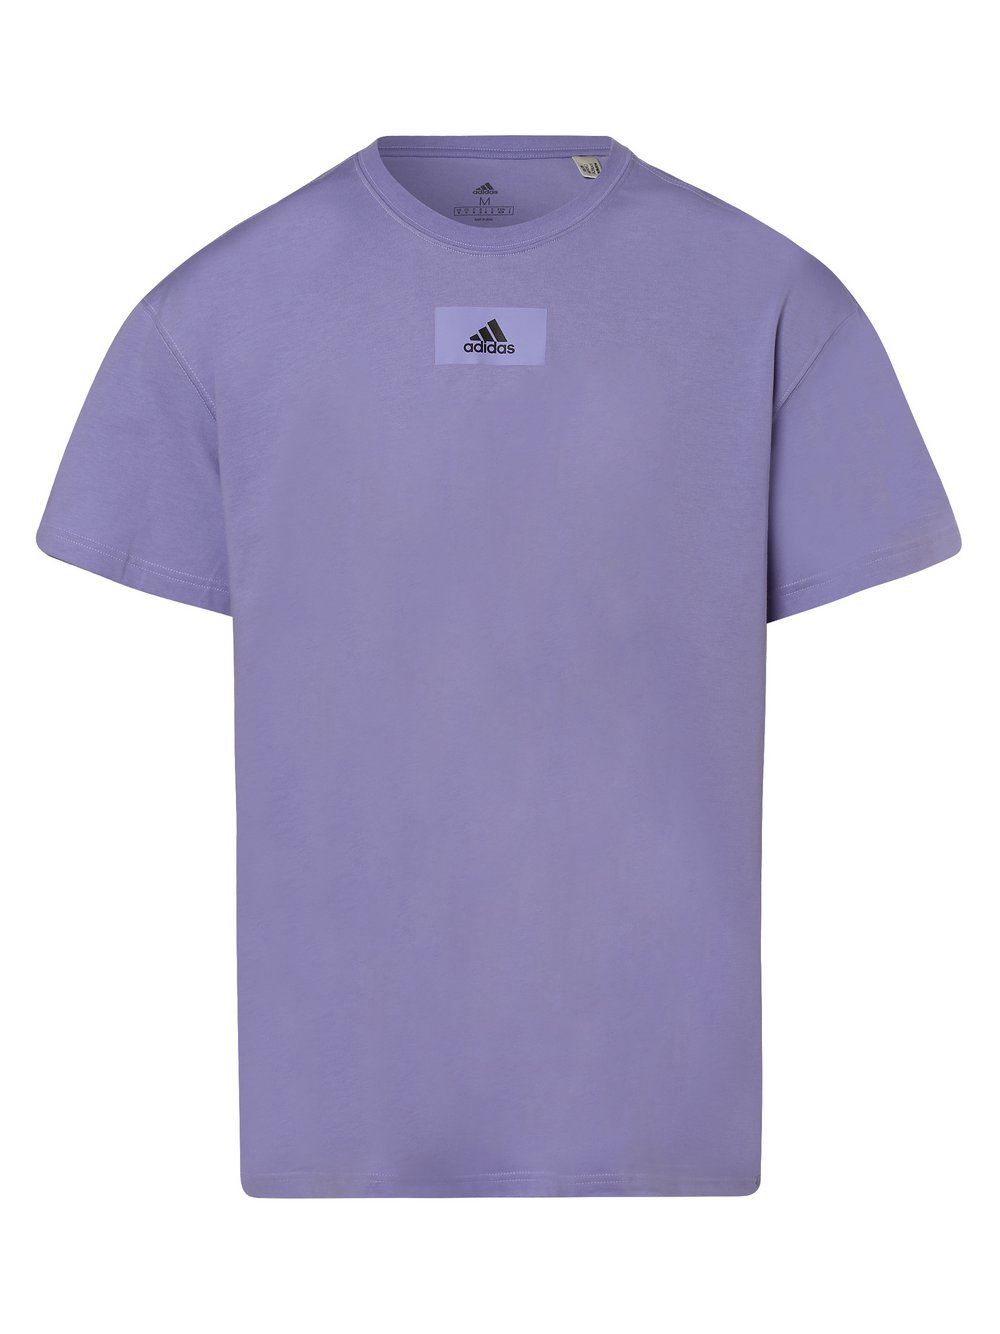 Adidas Performance - T-shirt męski, lila